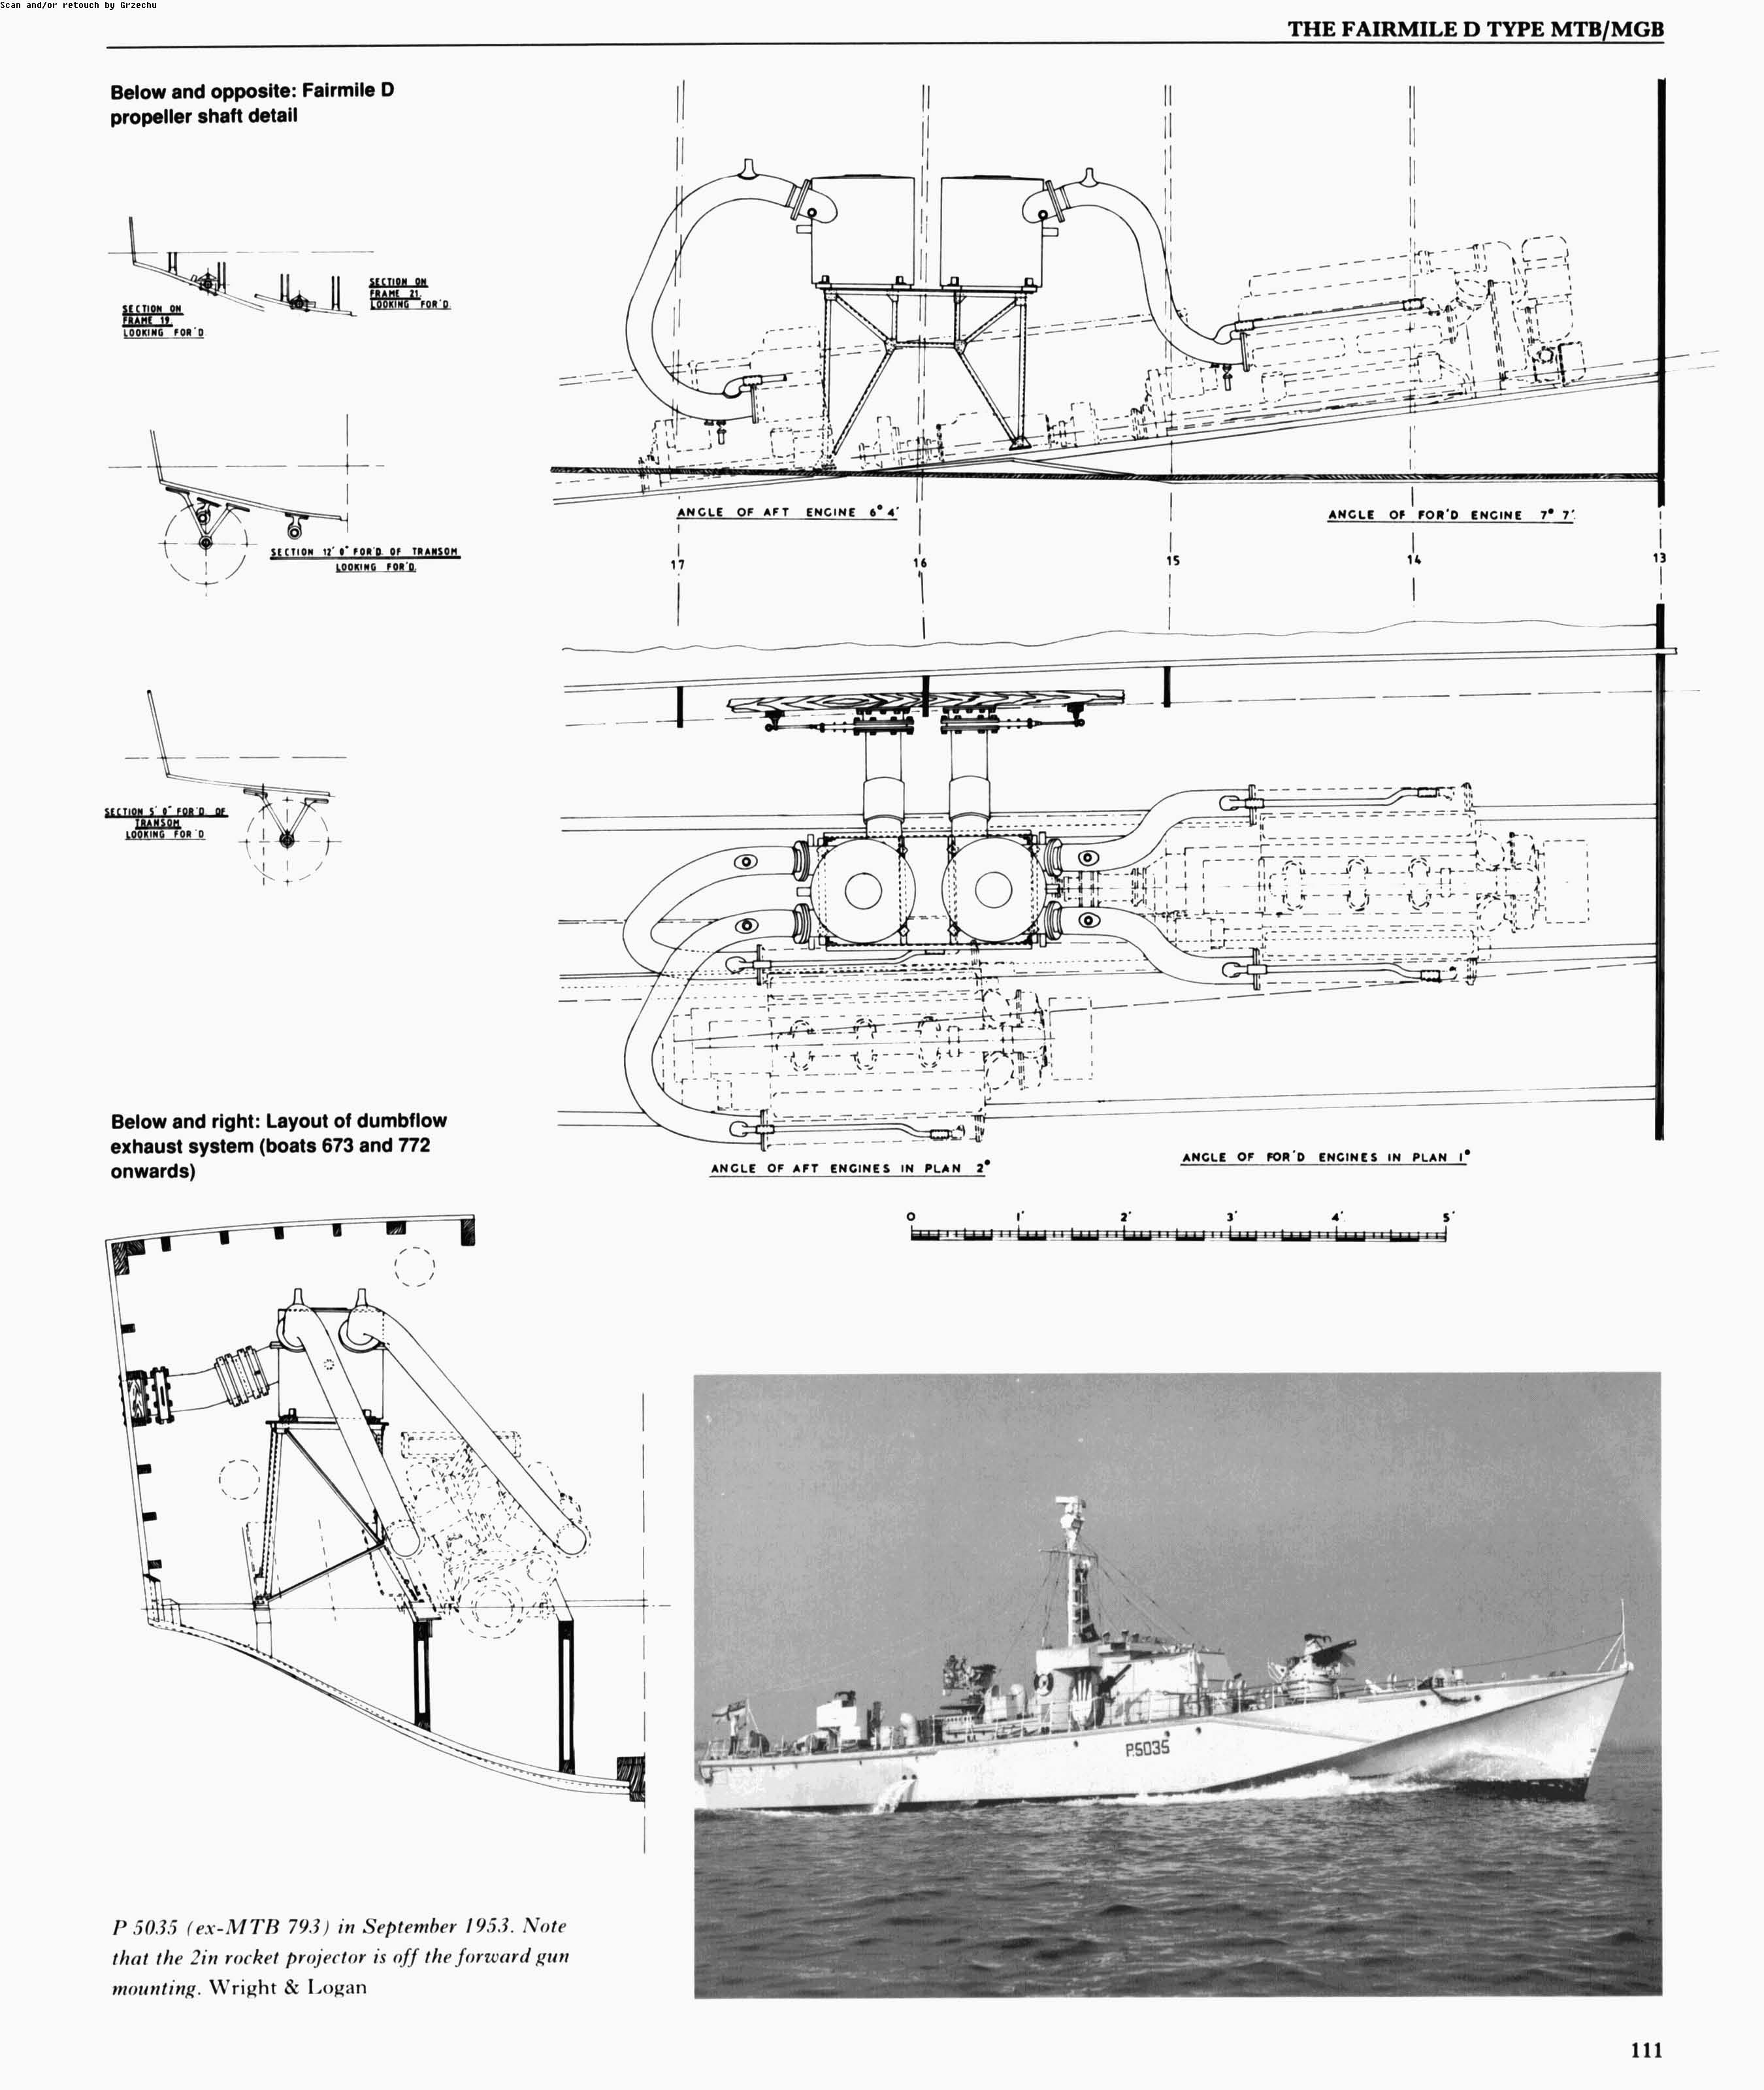 Allied Coastal Forces of World War II (1) Fairmile designs & U.S. submarine chasers_Page_113.jpg